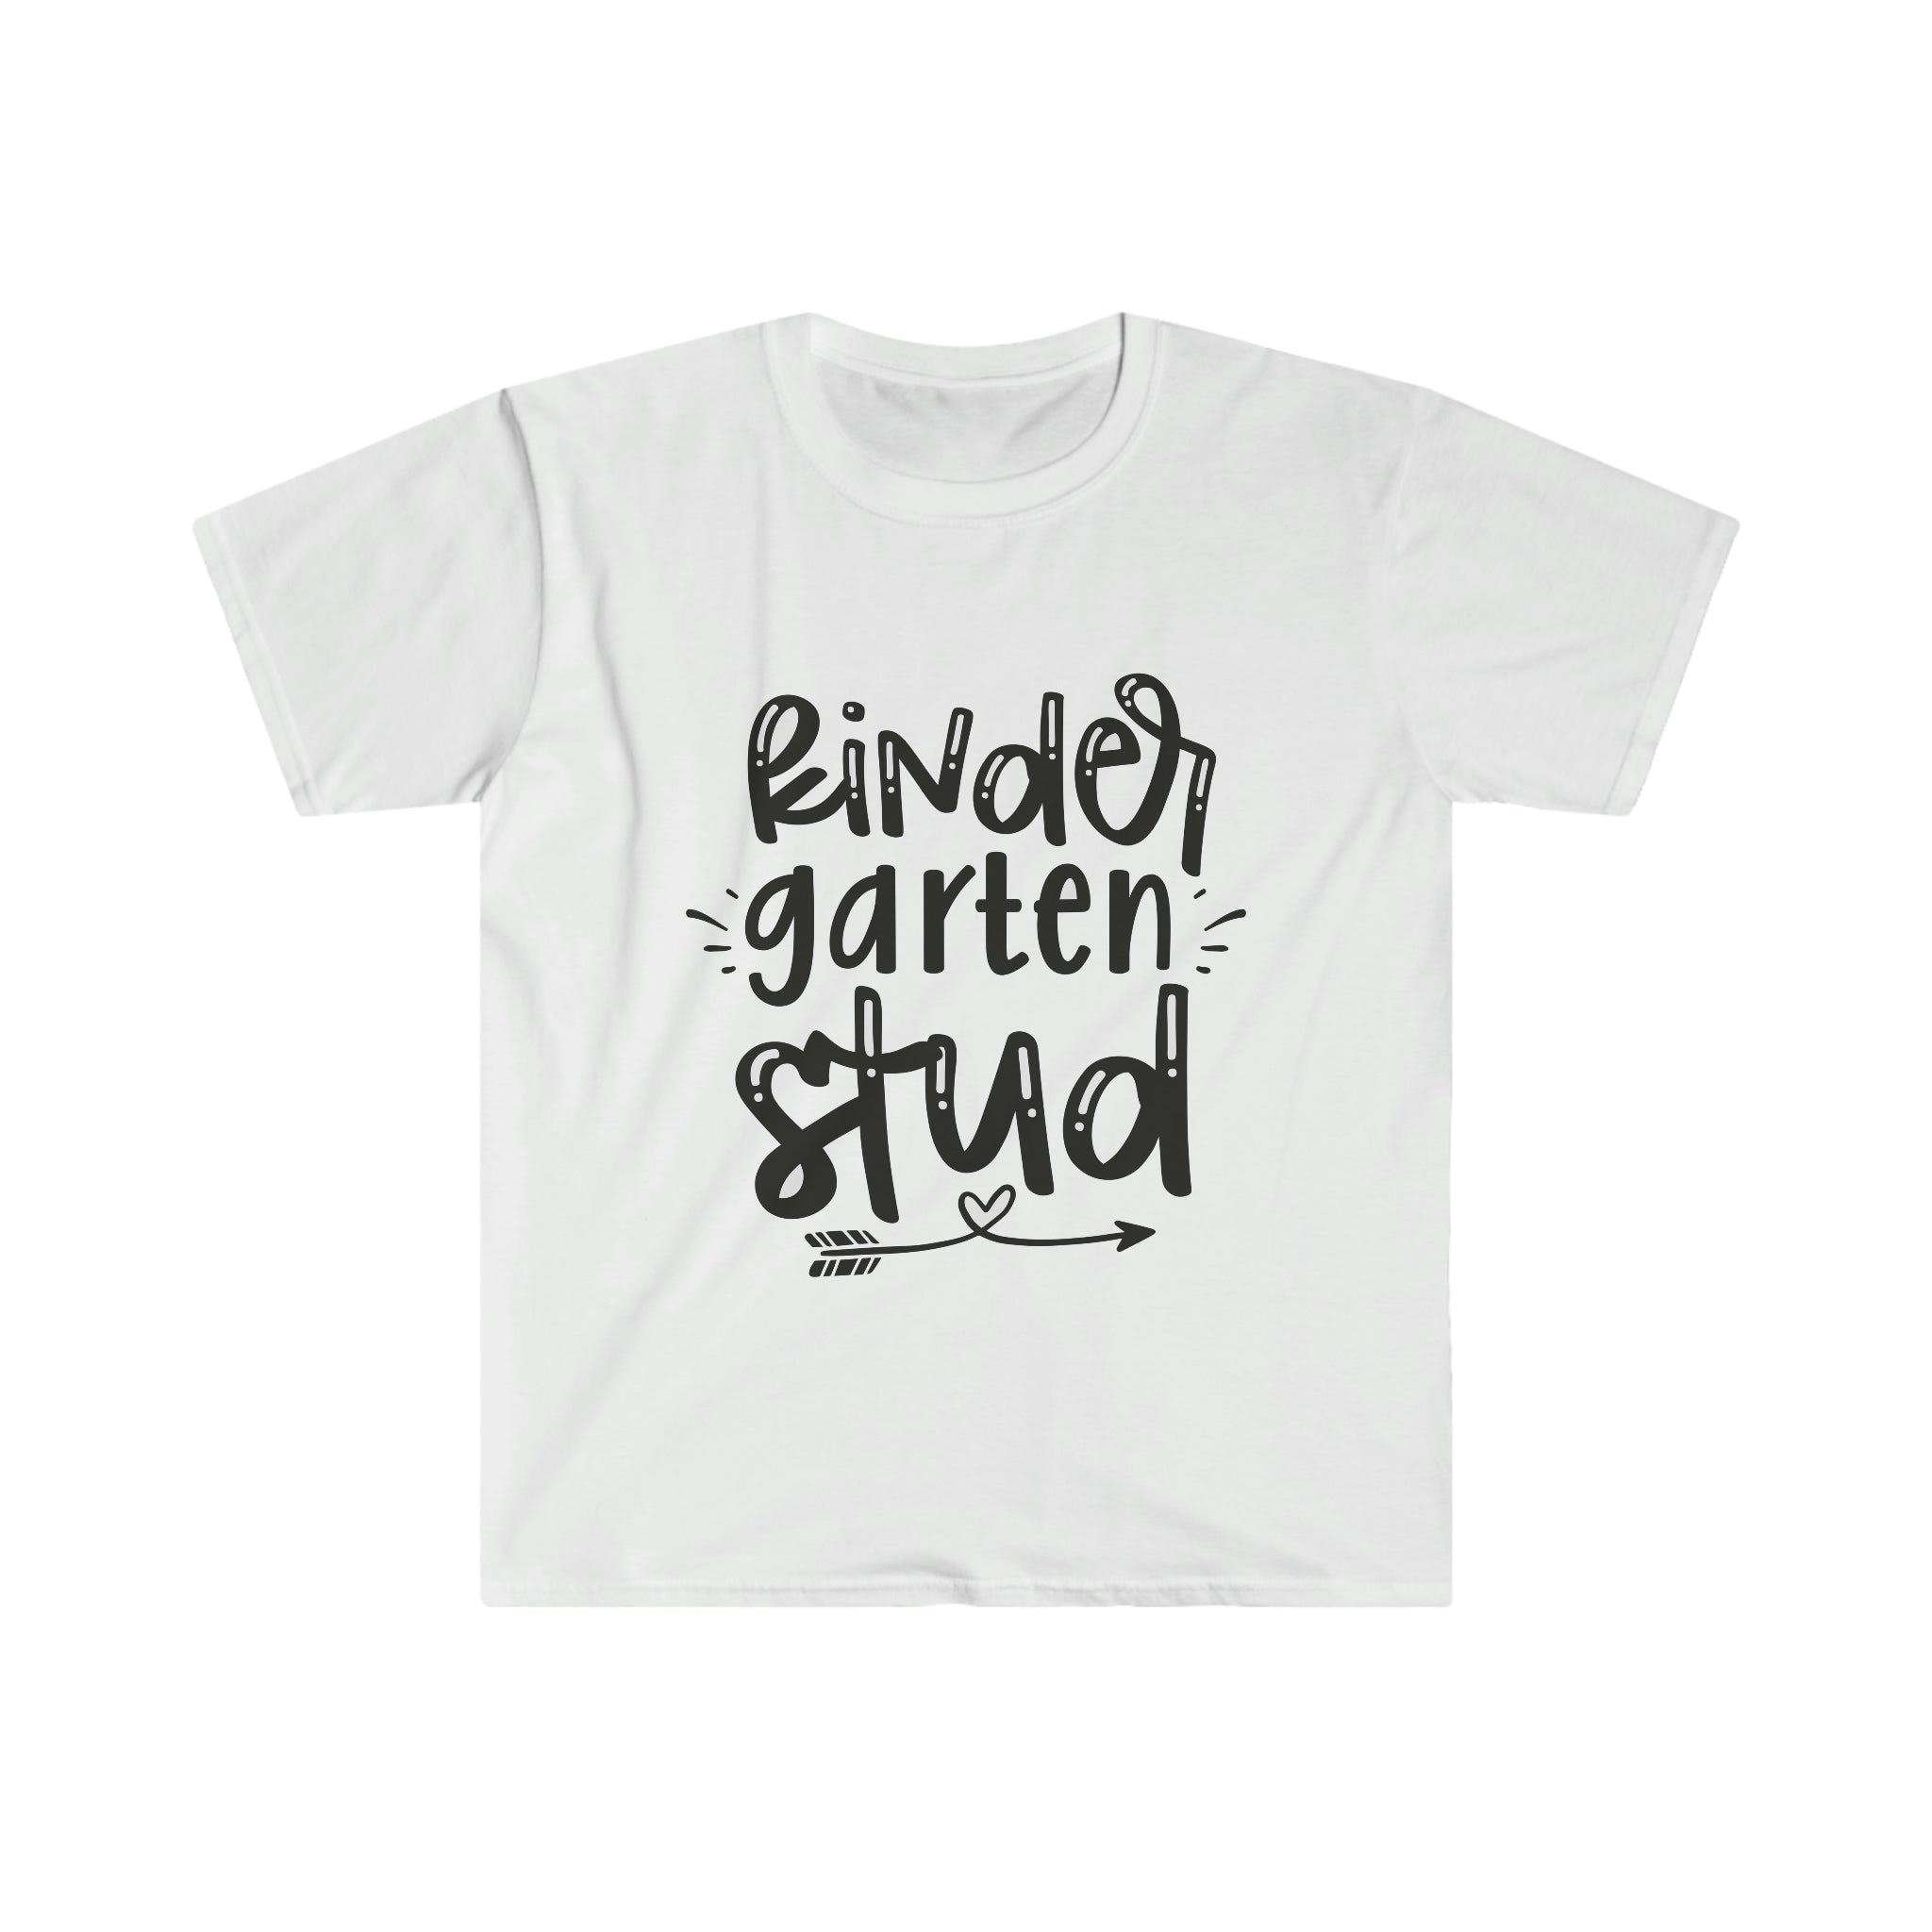 Kinder Garden Stud T-Shirt